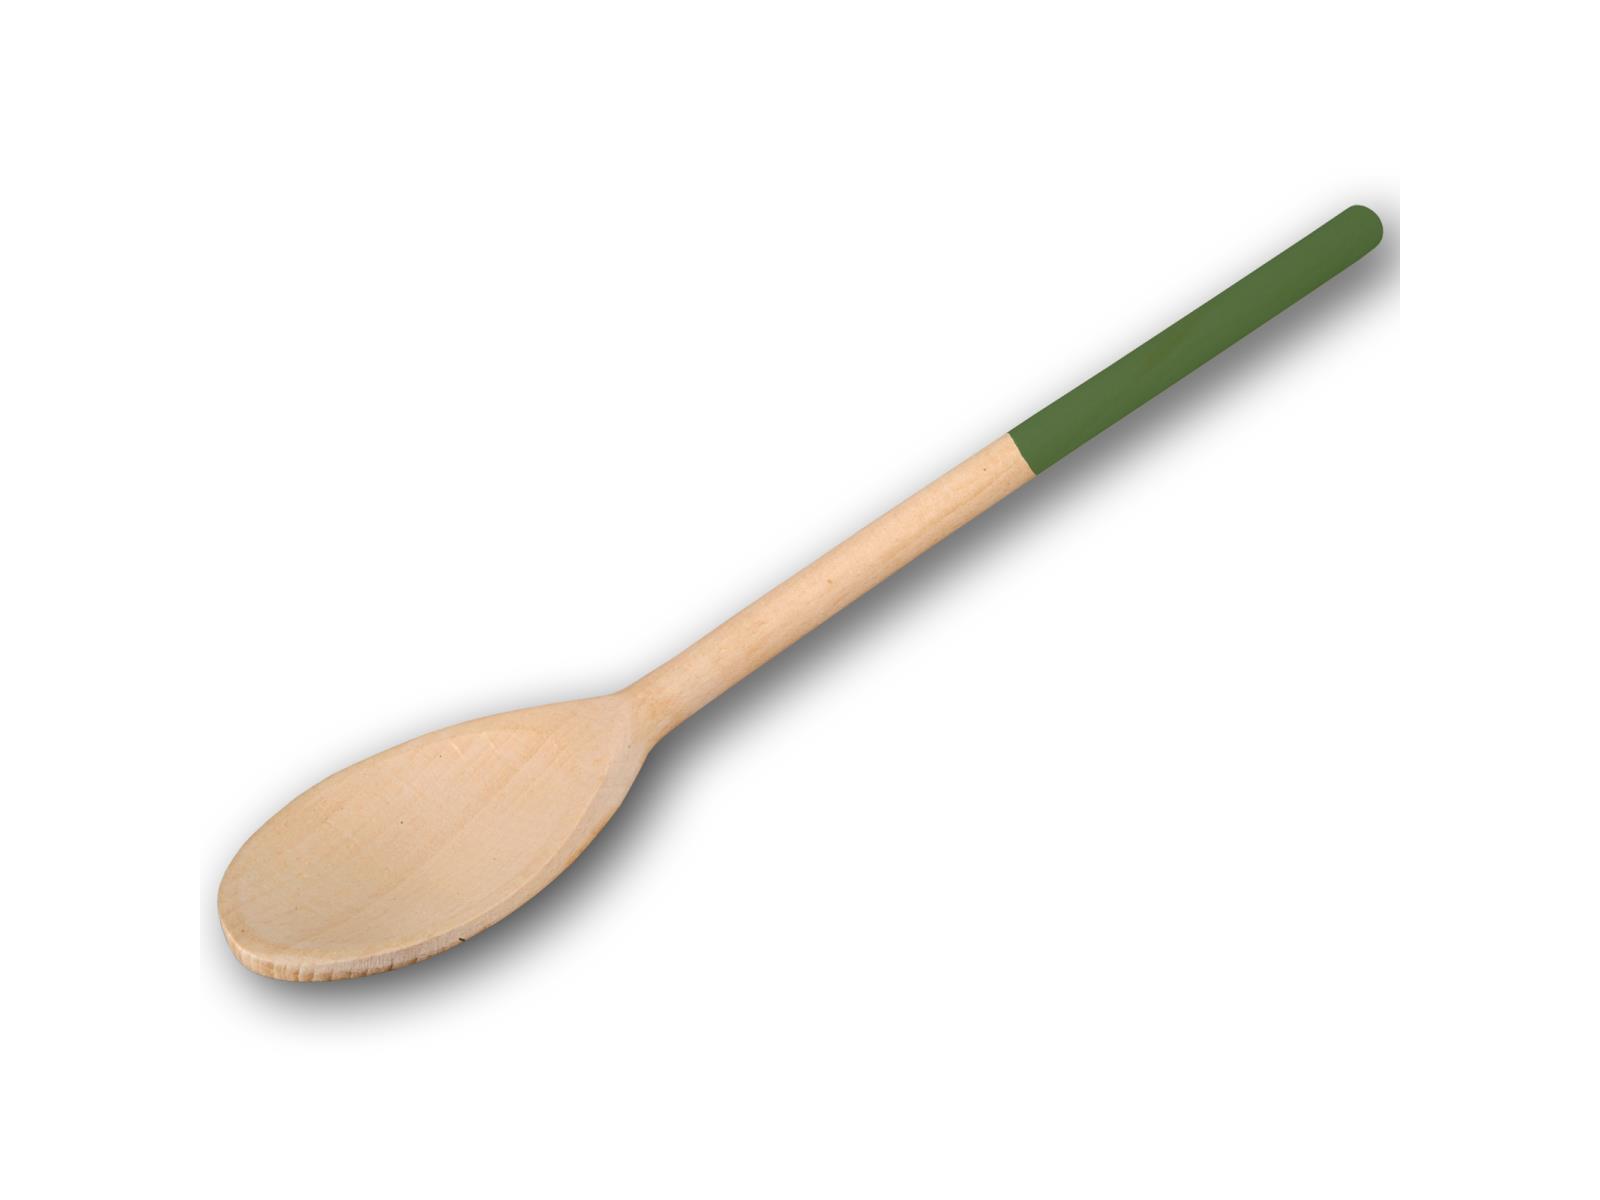 Kochlöffel, oval, mit farbigem Griff, laubgrün, aus Holz 30 cm